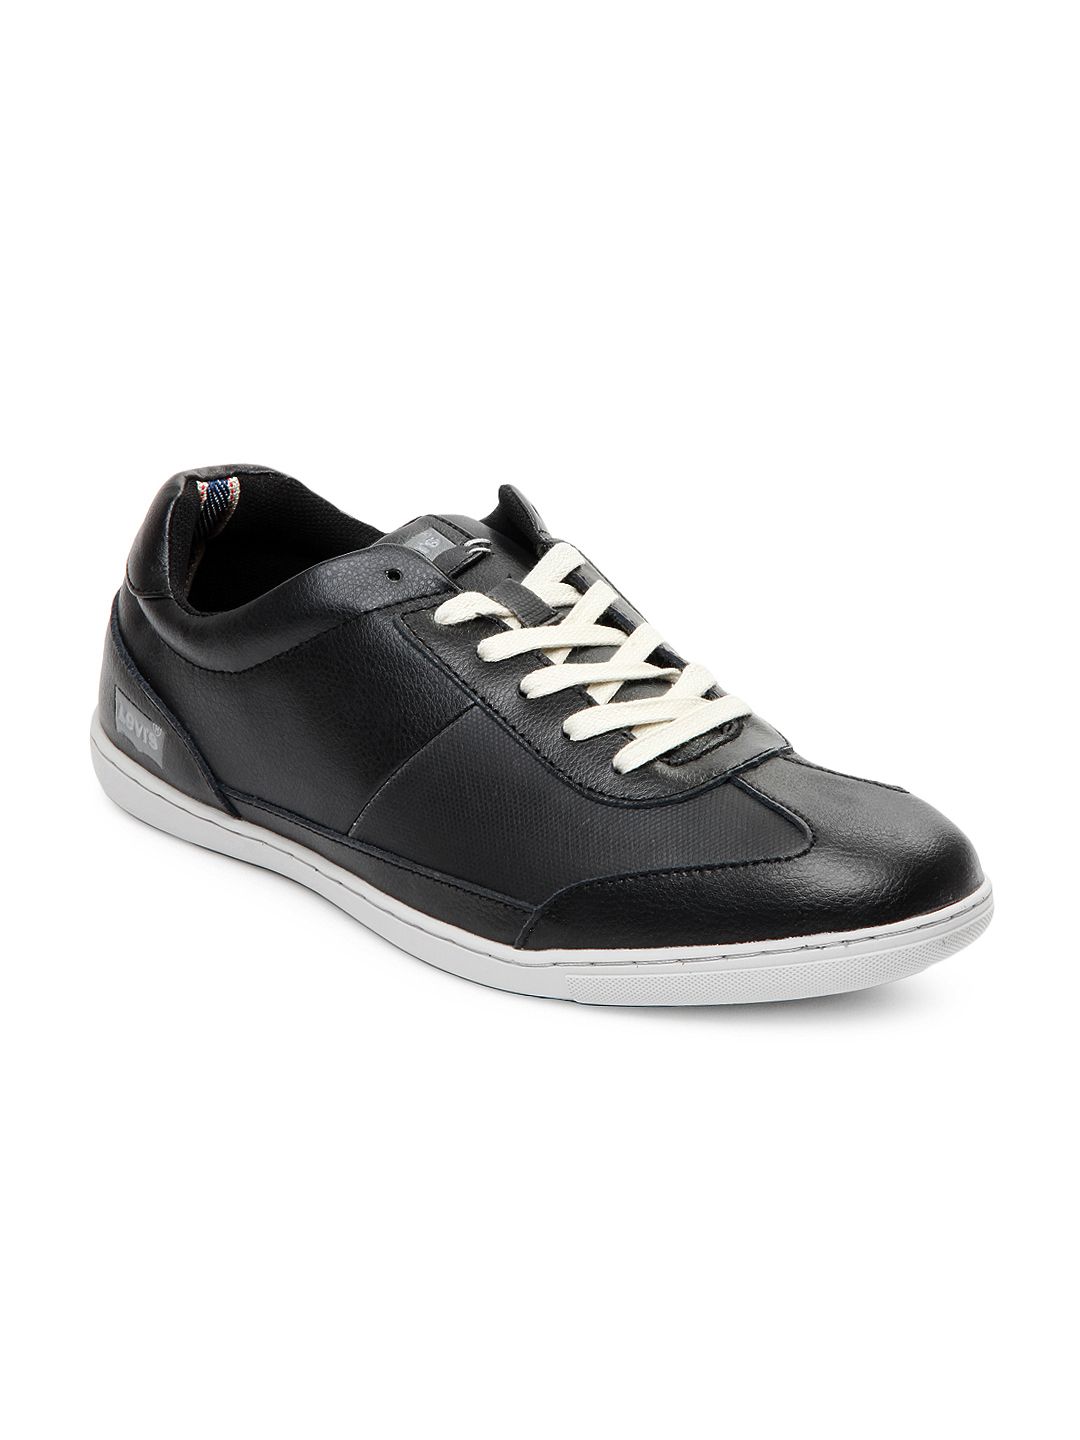 Buy Levis Men Black Casual Shoes - 632 - Footwear for Men - 173187